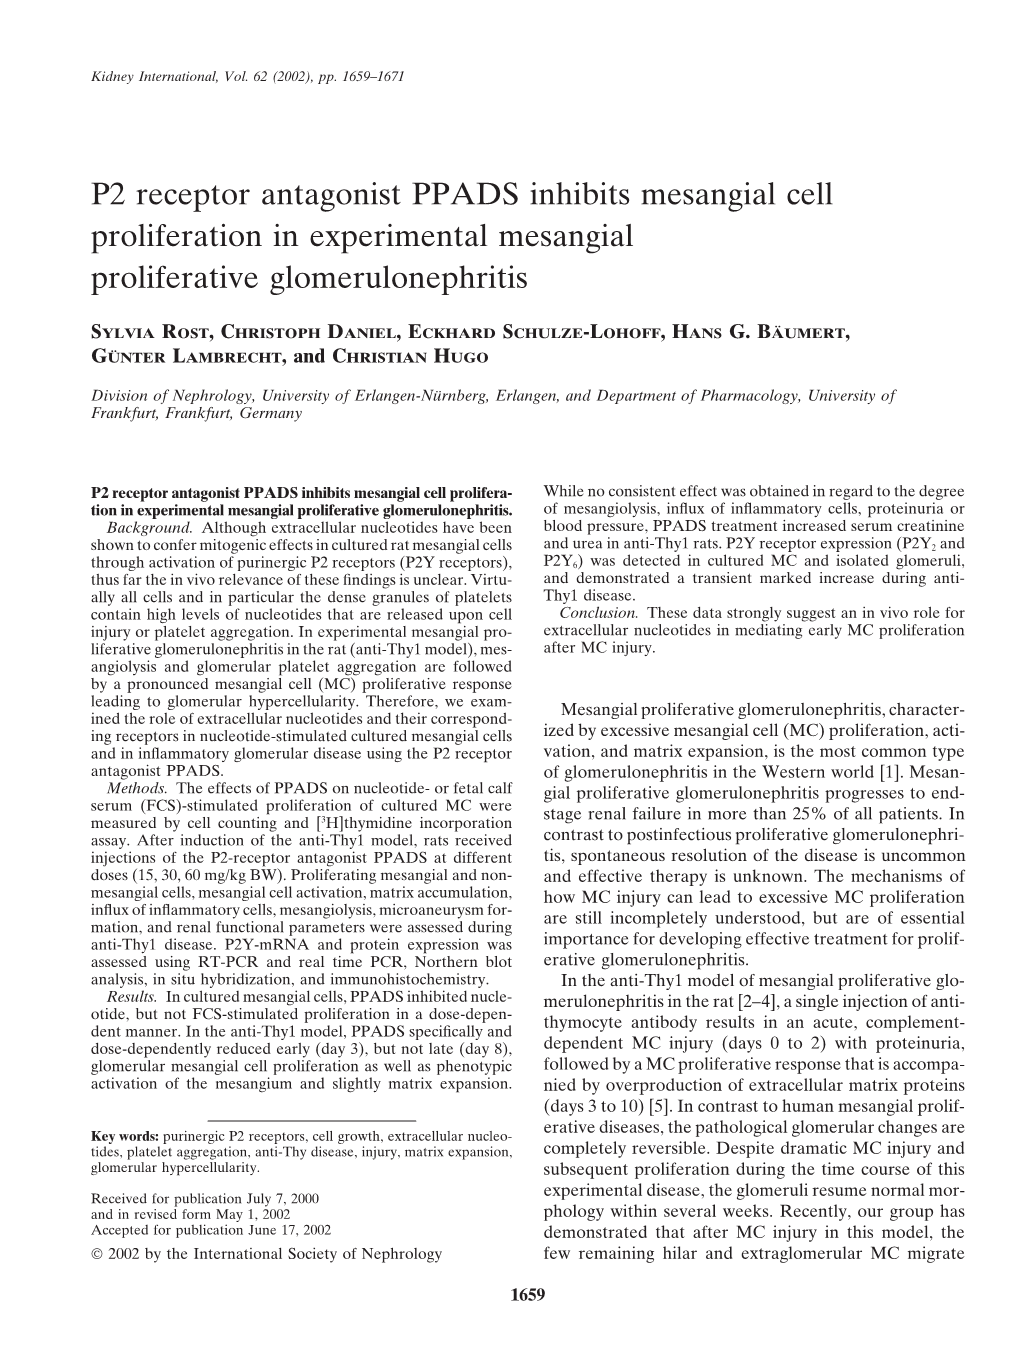 P2 Receptor Antagonist PPADS Inhibits Mesangial Cell Proliferation in Experimental Mesangial Proliferative Glomerulonephritis